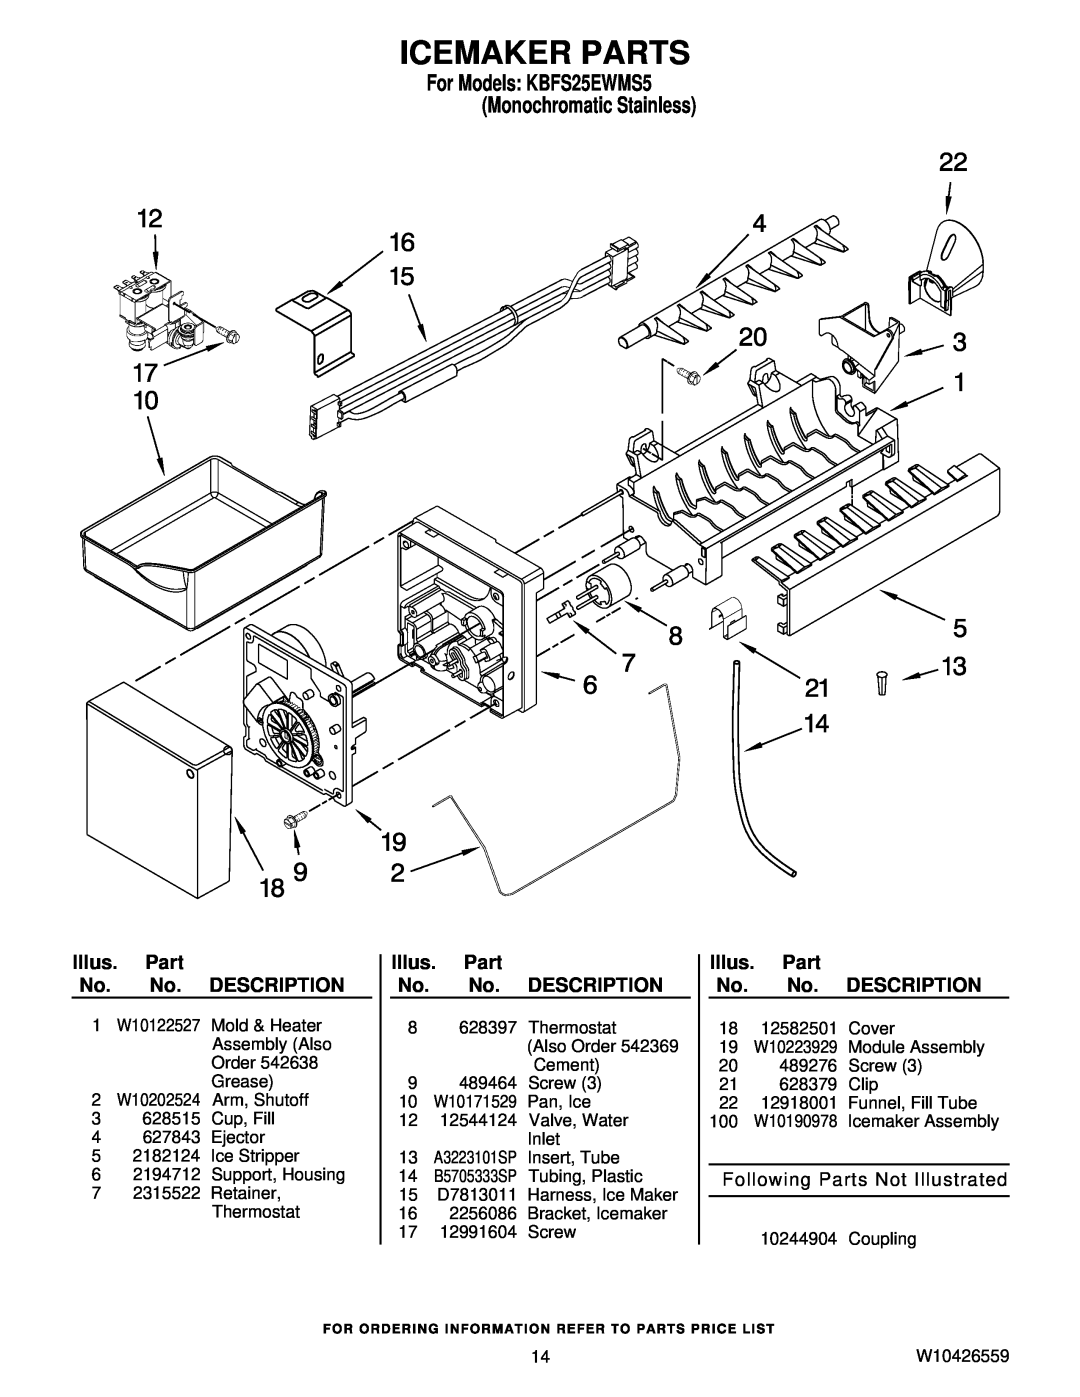 KitchenAid KBFS25EWMS5 manual Icemaker Parts, Illus. Part No. No. DESCRIPTION, Following Parts Not Illustrated 